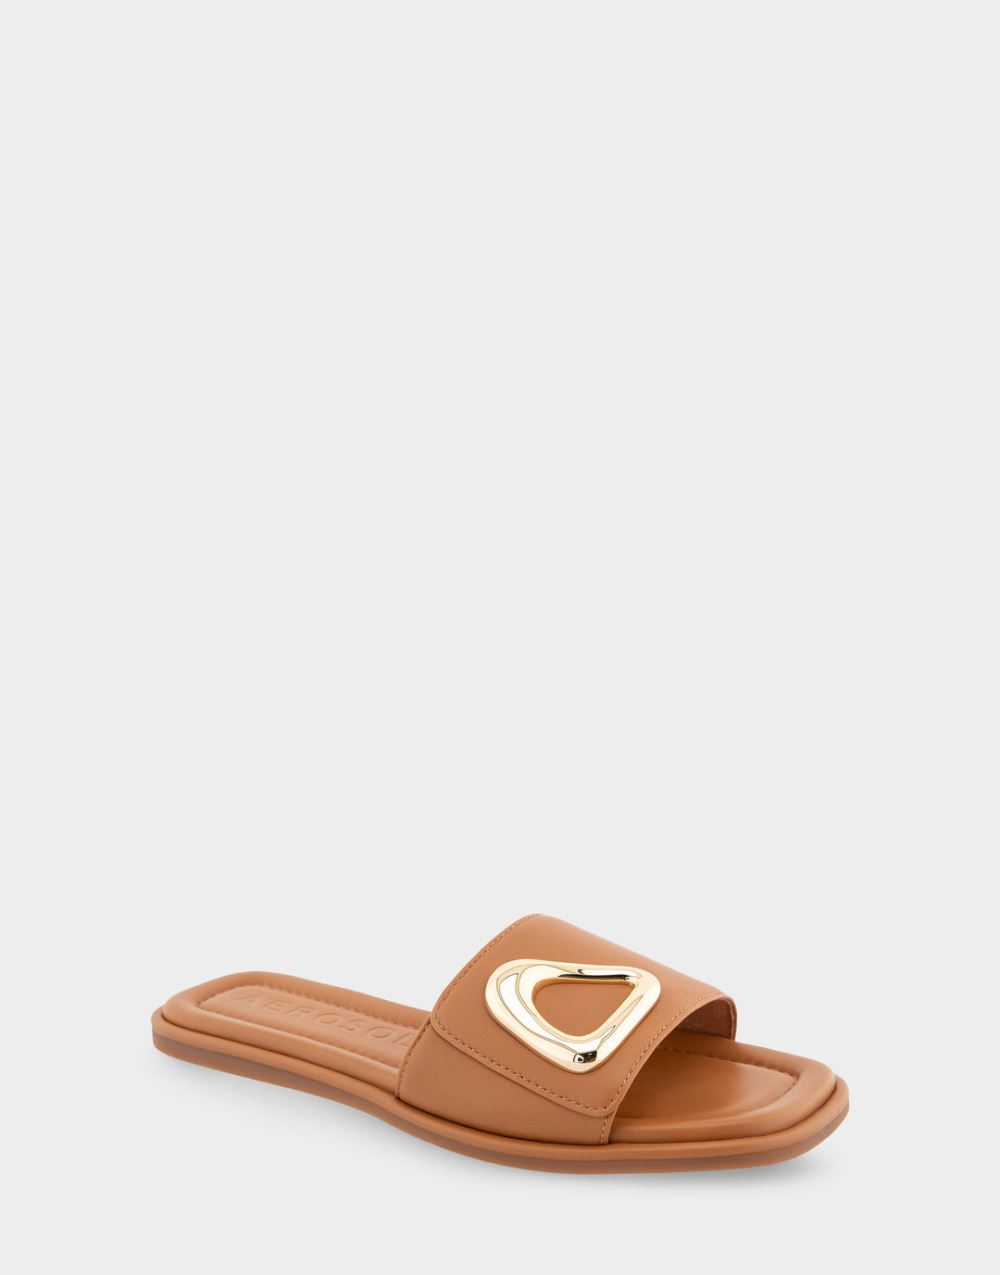 Women's | Blaire Tan Leather Ornamented Single Band Slide Sandal